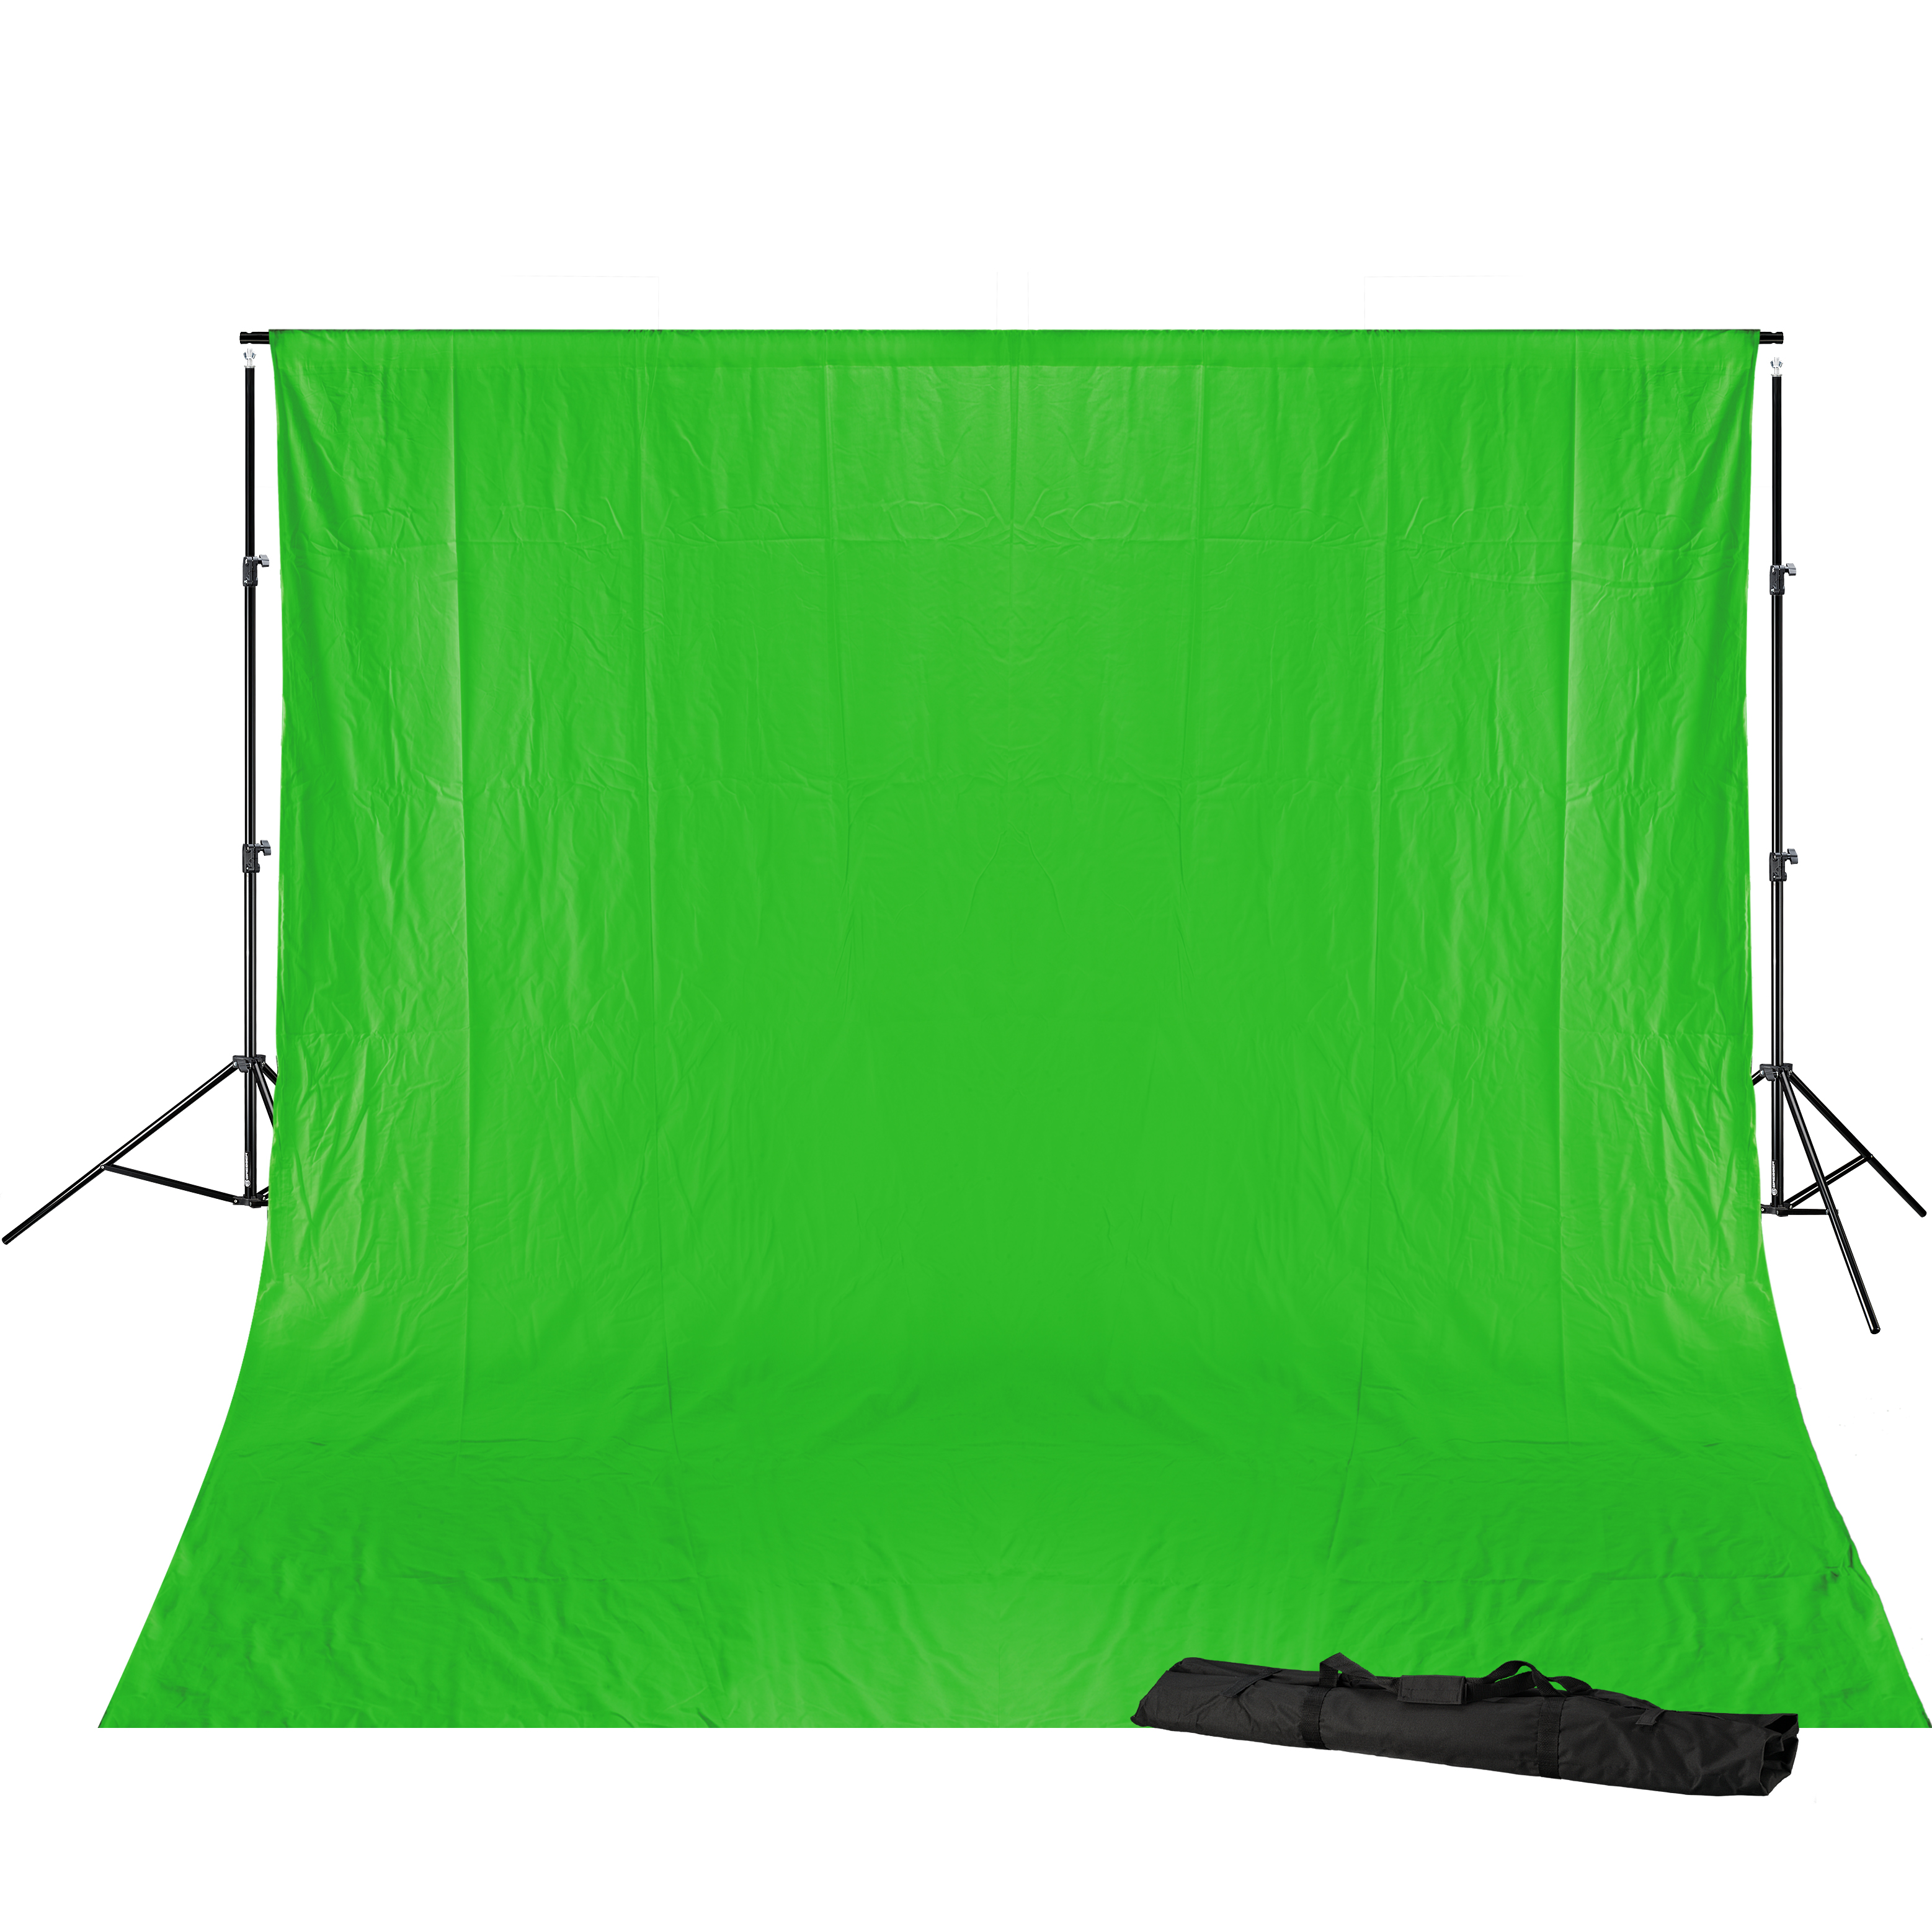 BRESSER BR-D23 Background System + Background Cloth 3 x 6m Chromakey Green